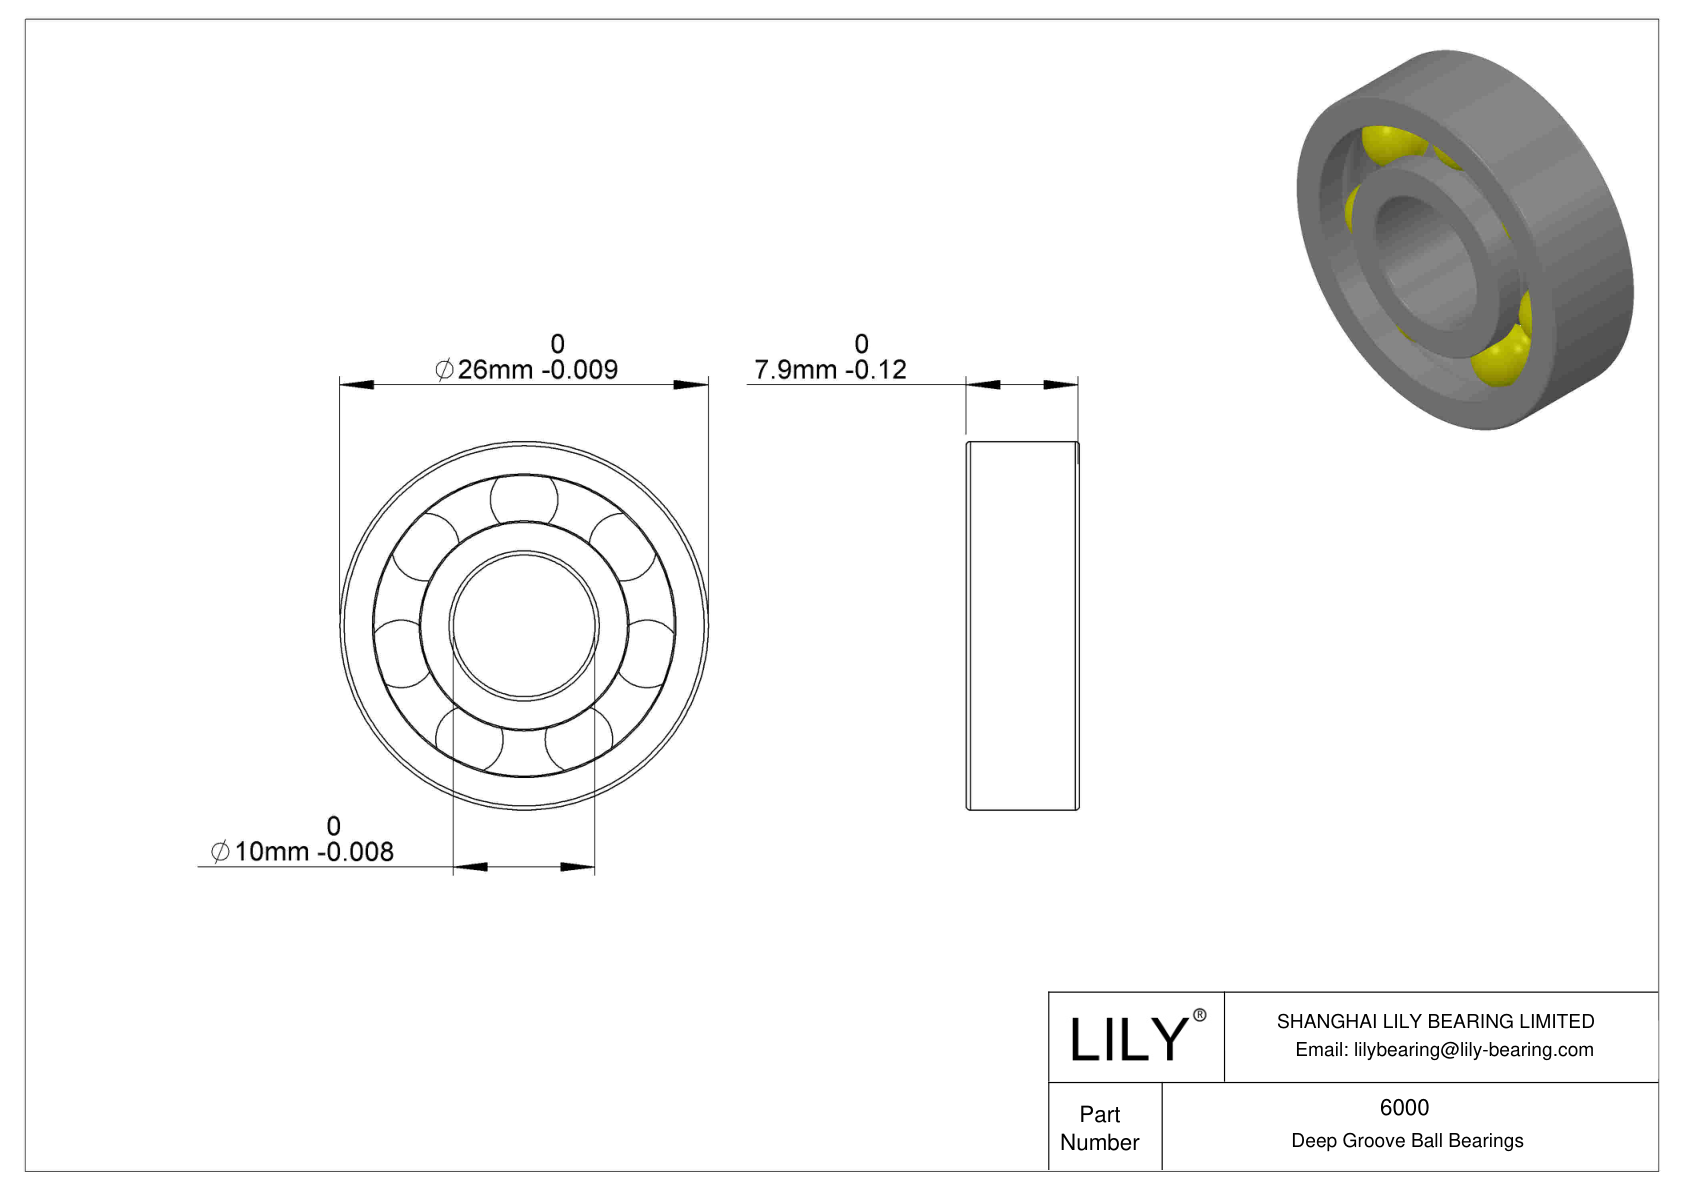 LILY-PU600030-11 Polyurethane Coated Bearing cad drawing